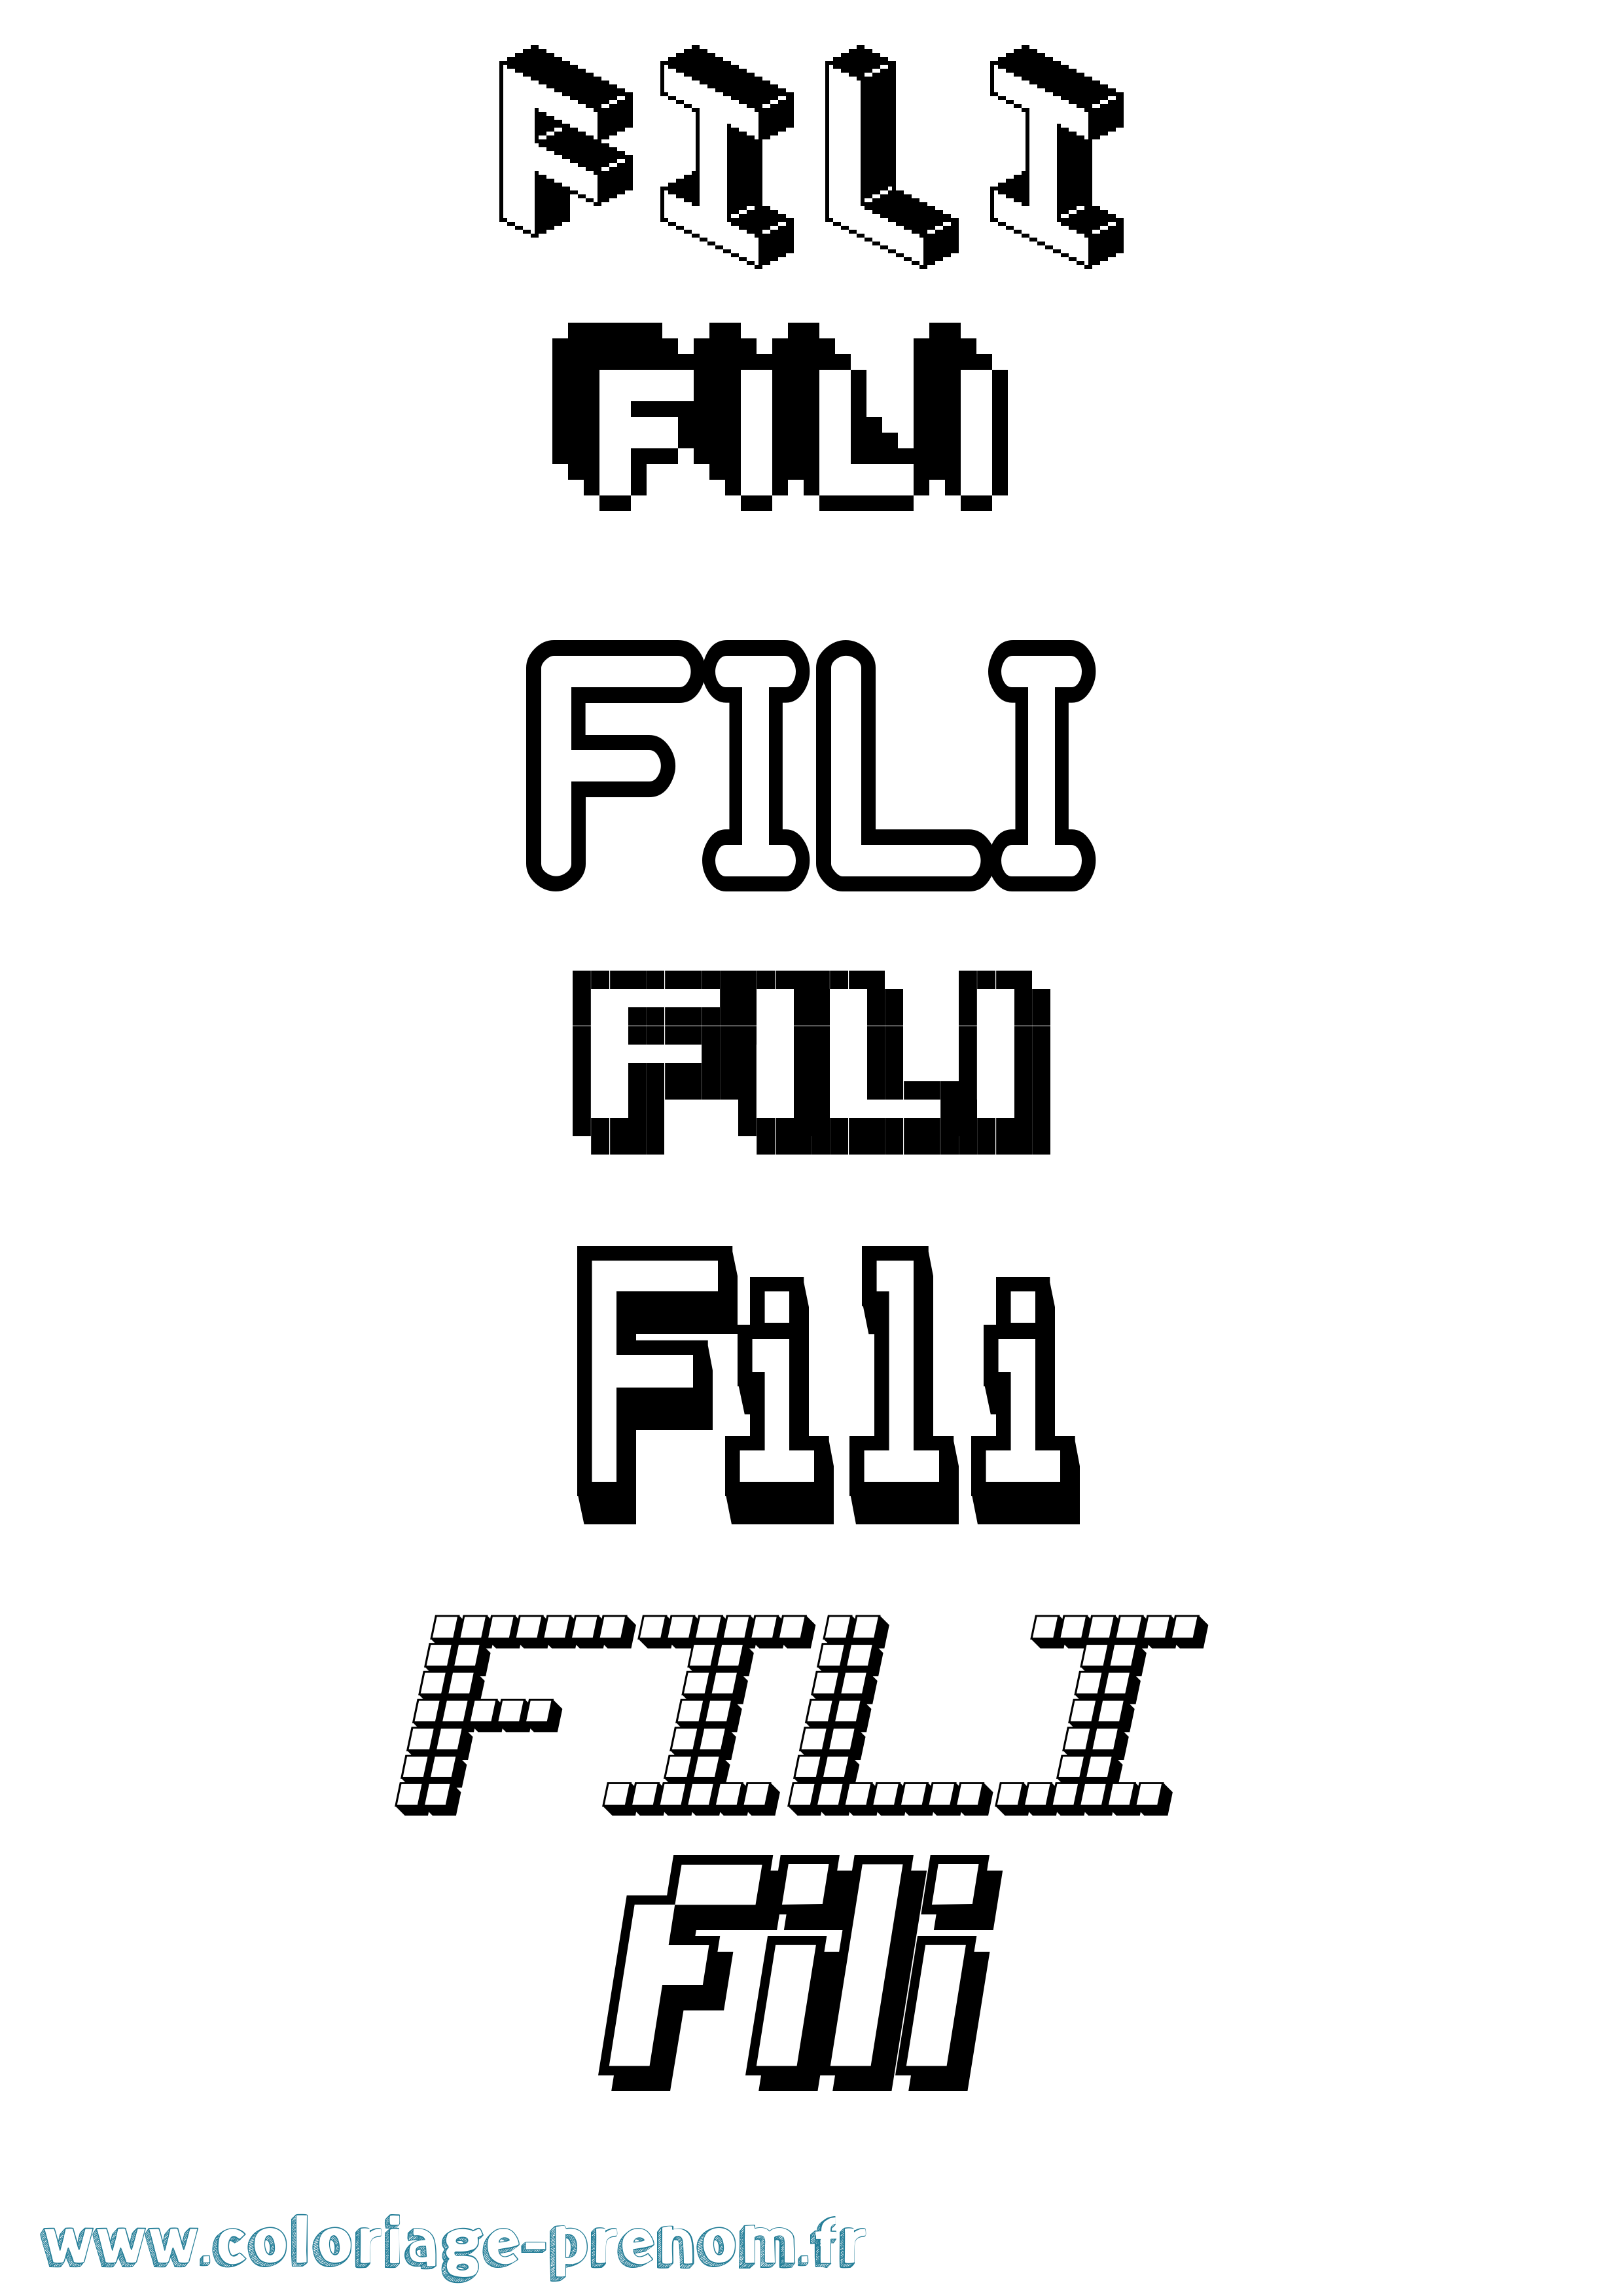 Coloriage prénom Fili Pixel